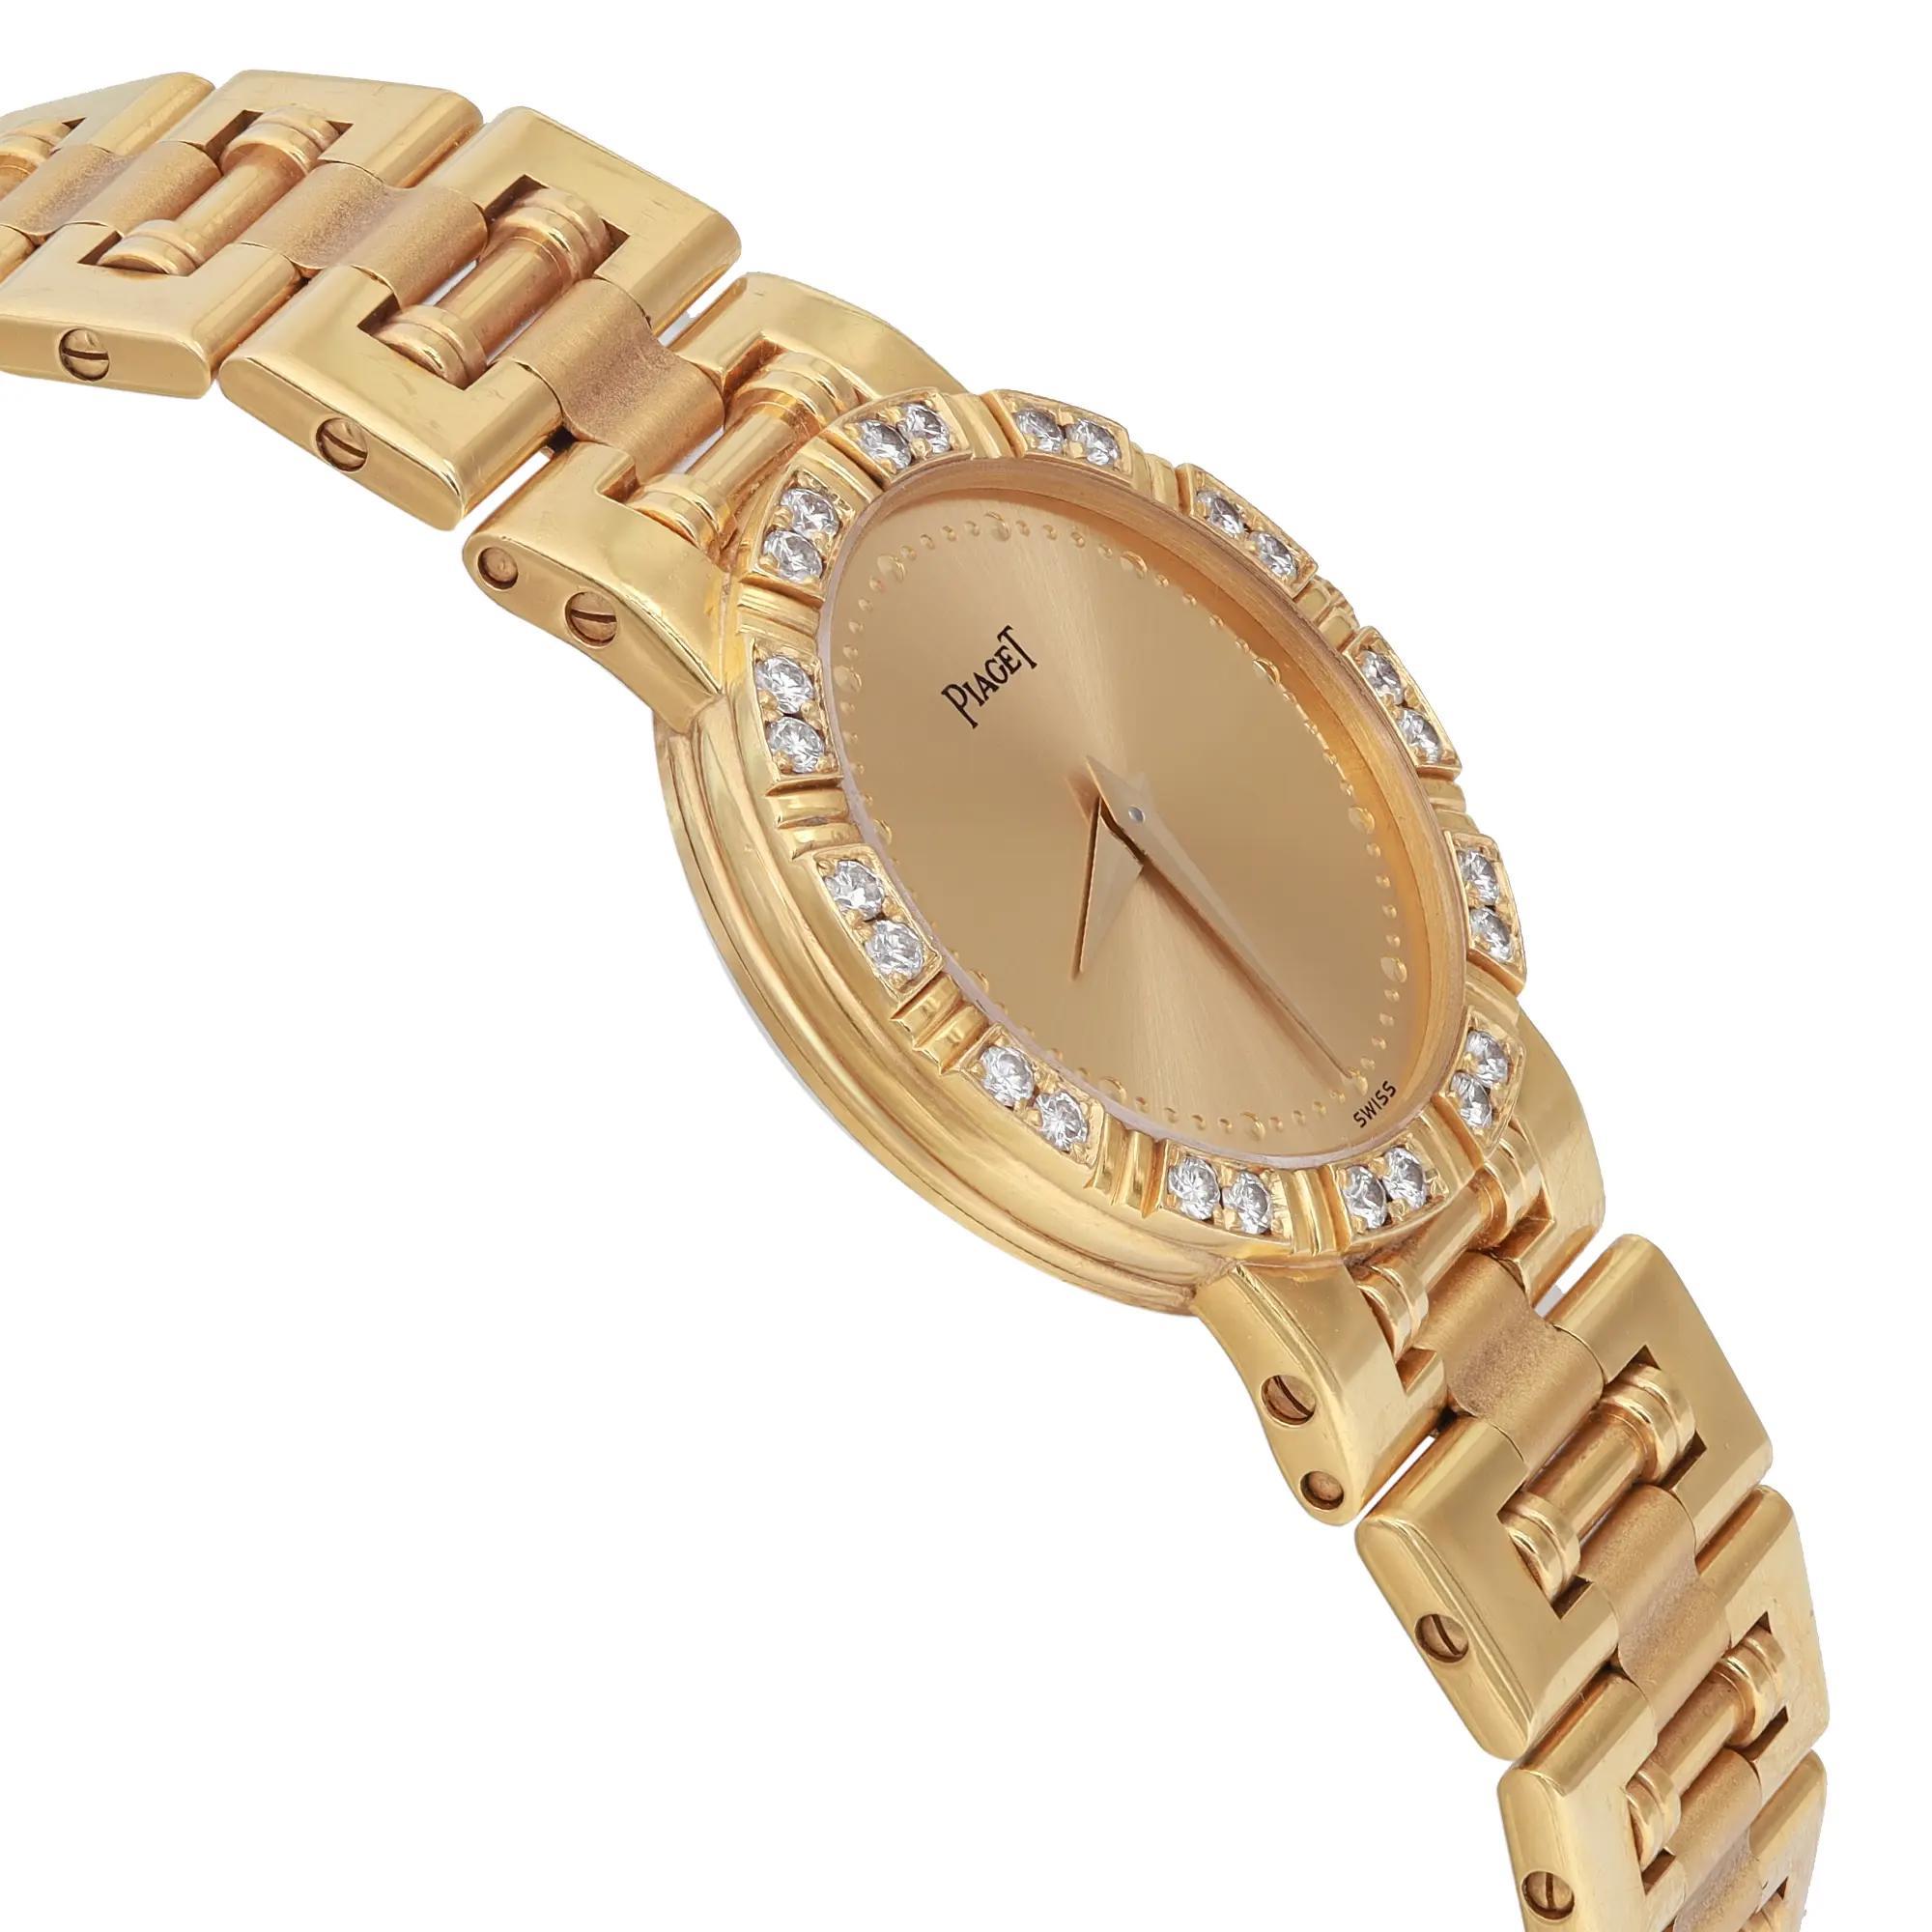 piaget women's watch with diamonds